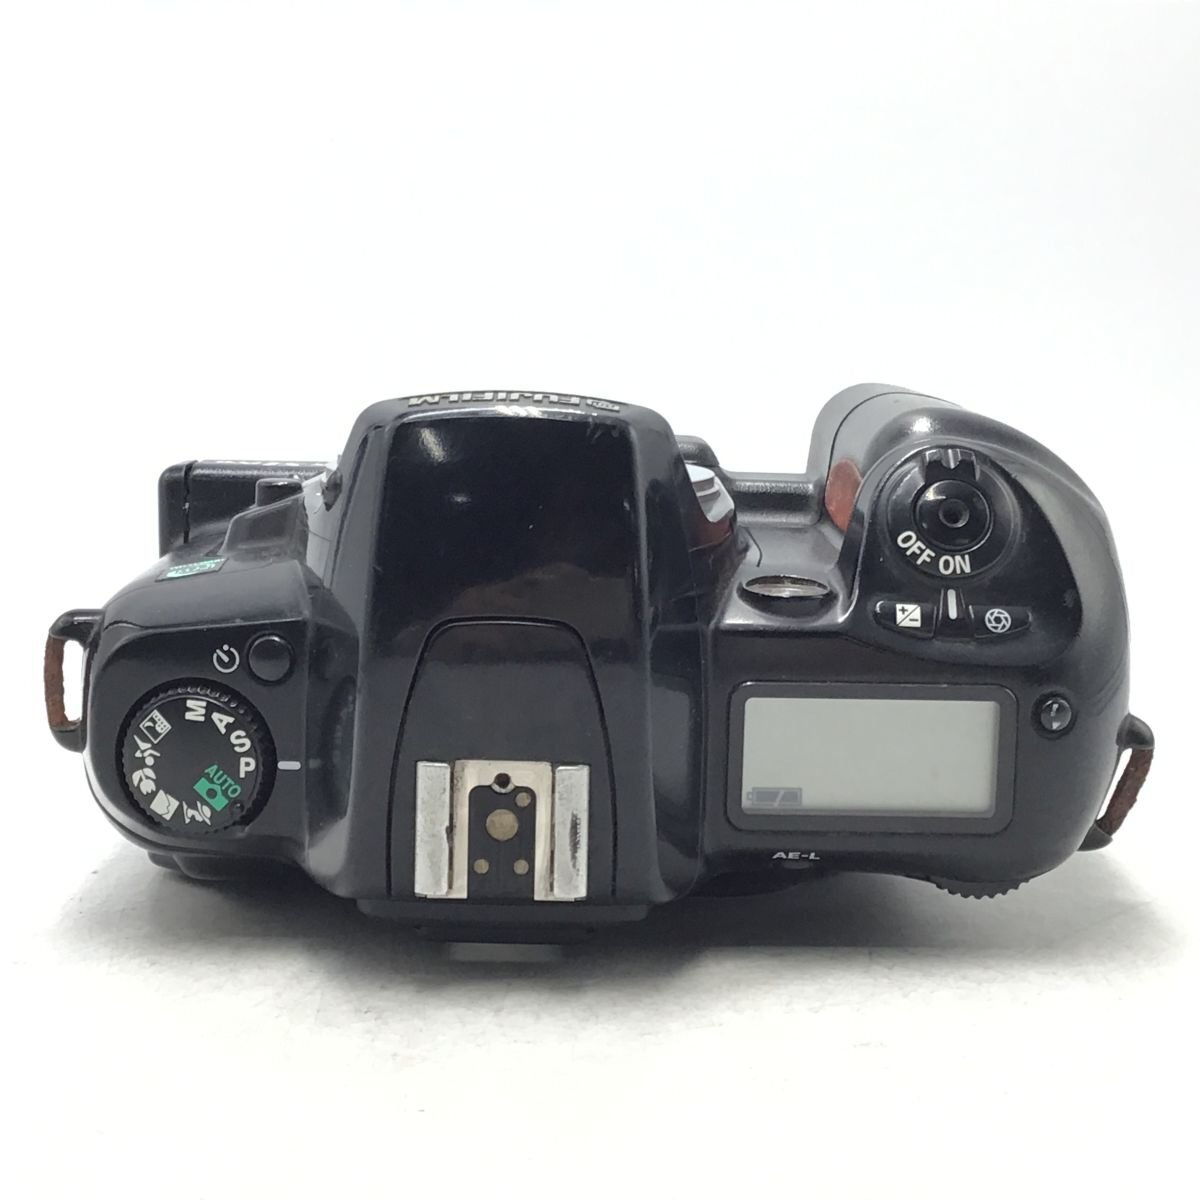  camera FUJIFILM FinePix S1 Pro single‐lens reflex body junk [8226KC]